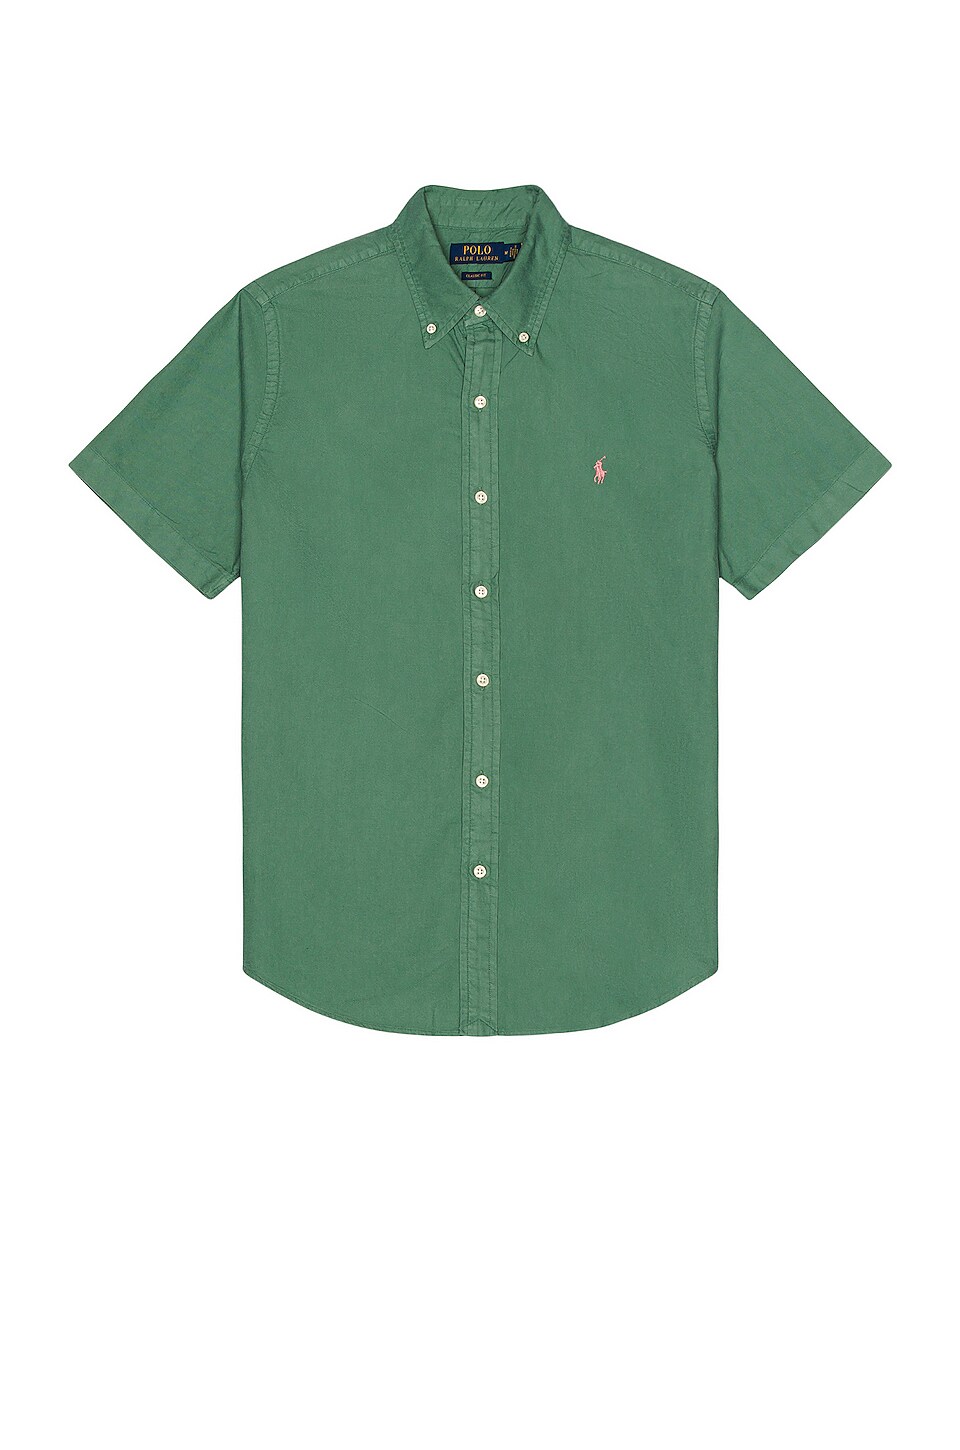 Polo Ralph Lauren Short Sleeve Oxford Shirt in Fairway Green | REVOLVE